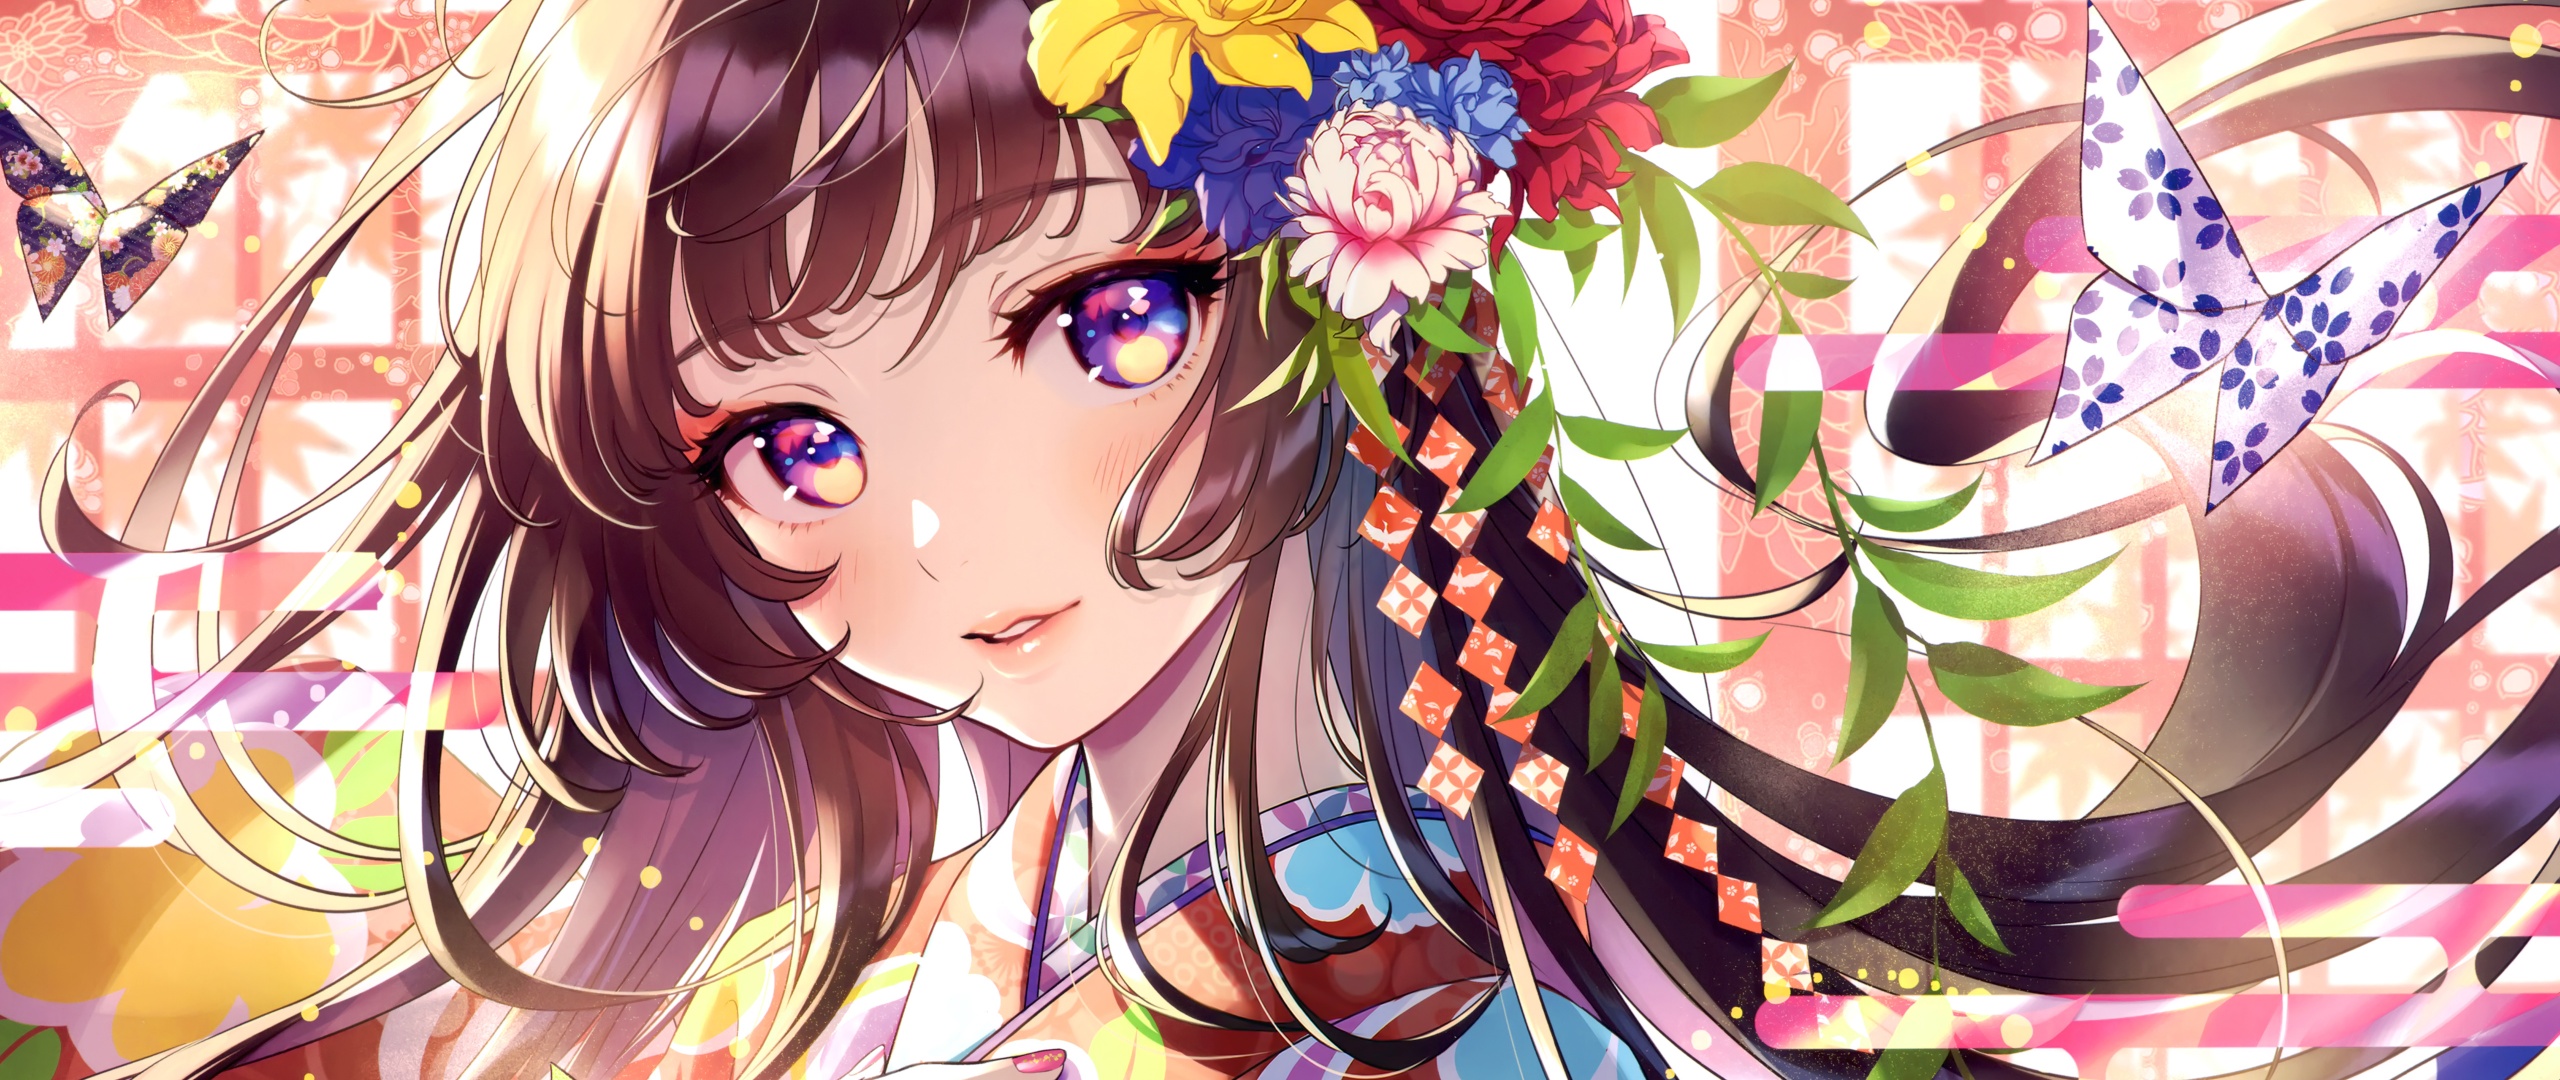 Anime girl Wallpaper 4K, Floral, Colorful, Girly, Fantasy, #4193